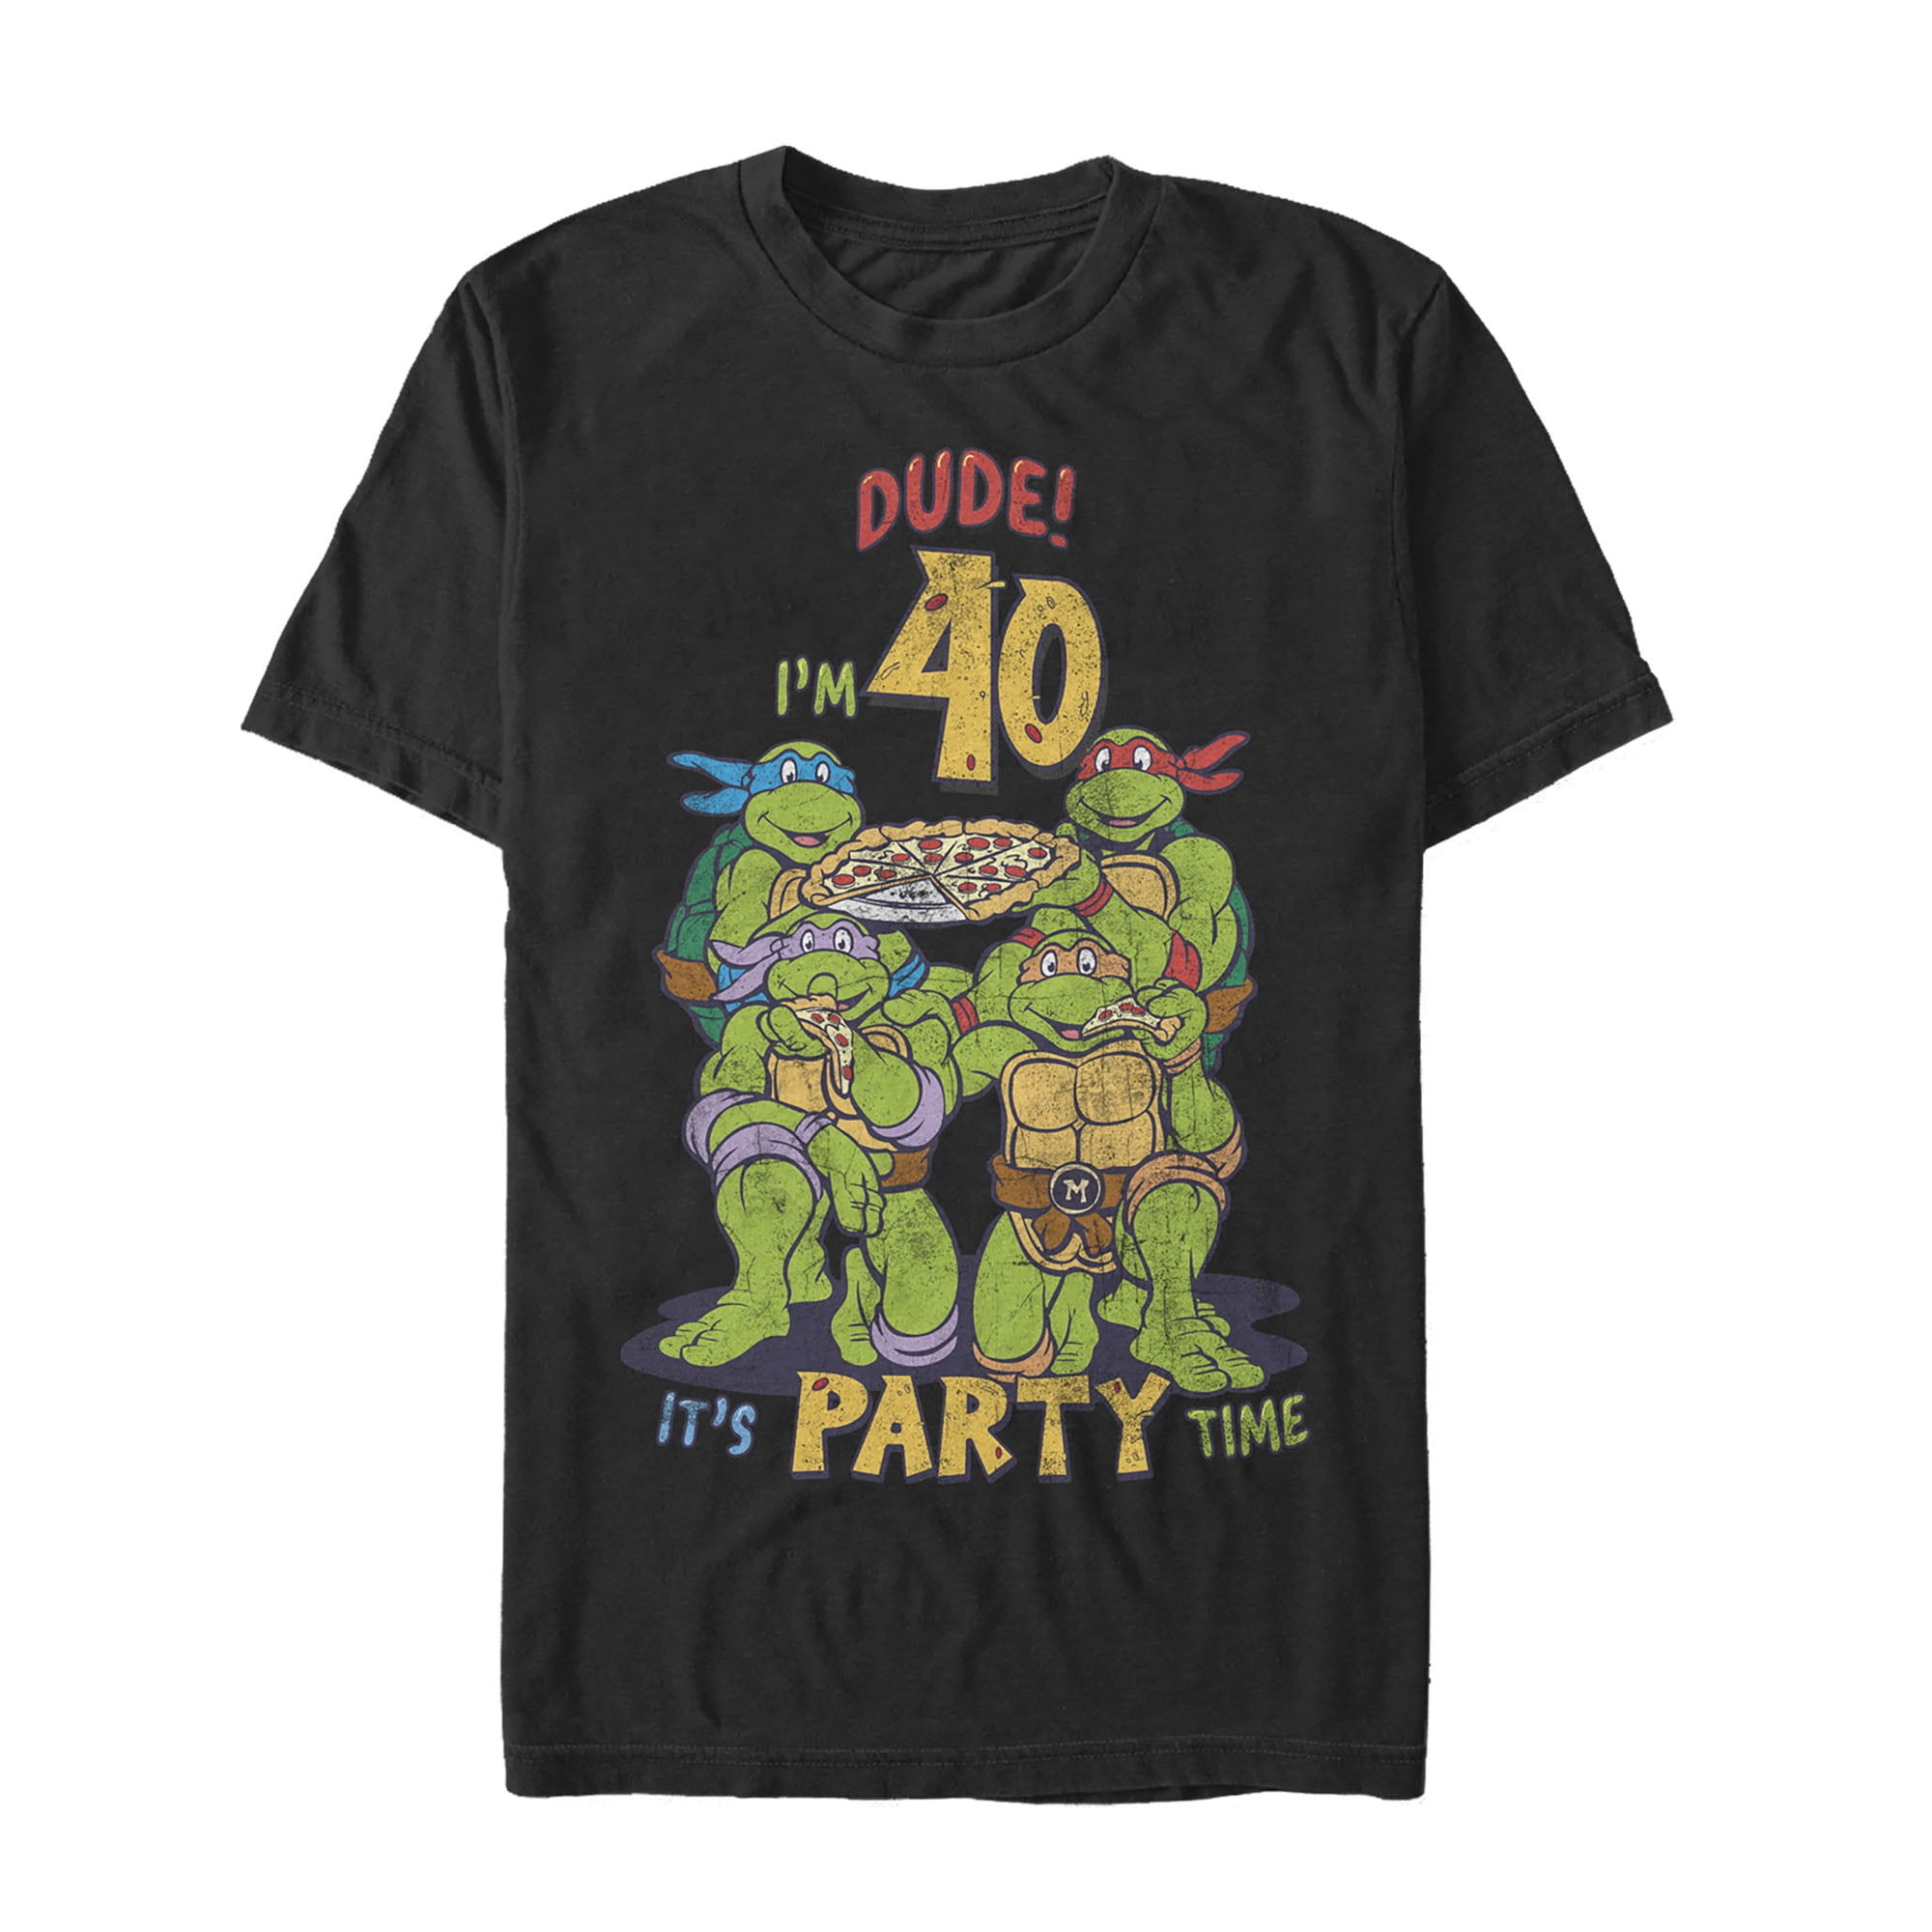 Teenage Mutant Ninja Turtles T-shirt, Funny Artists Ninja Turtle Shirt -  Ink In Action